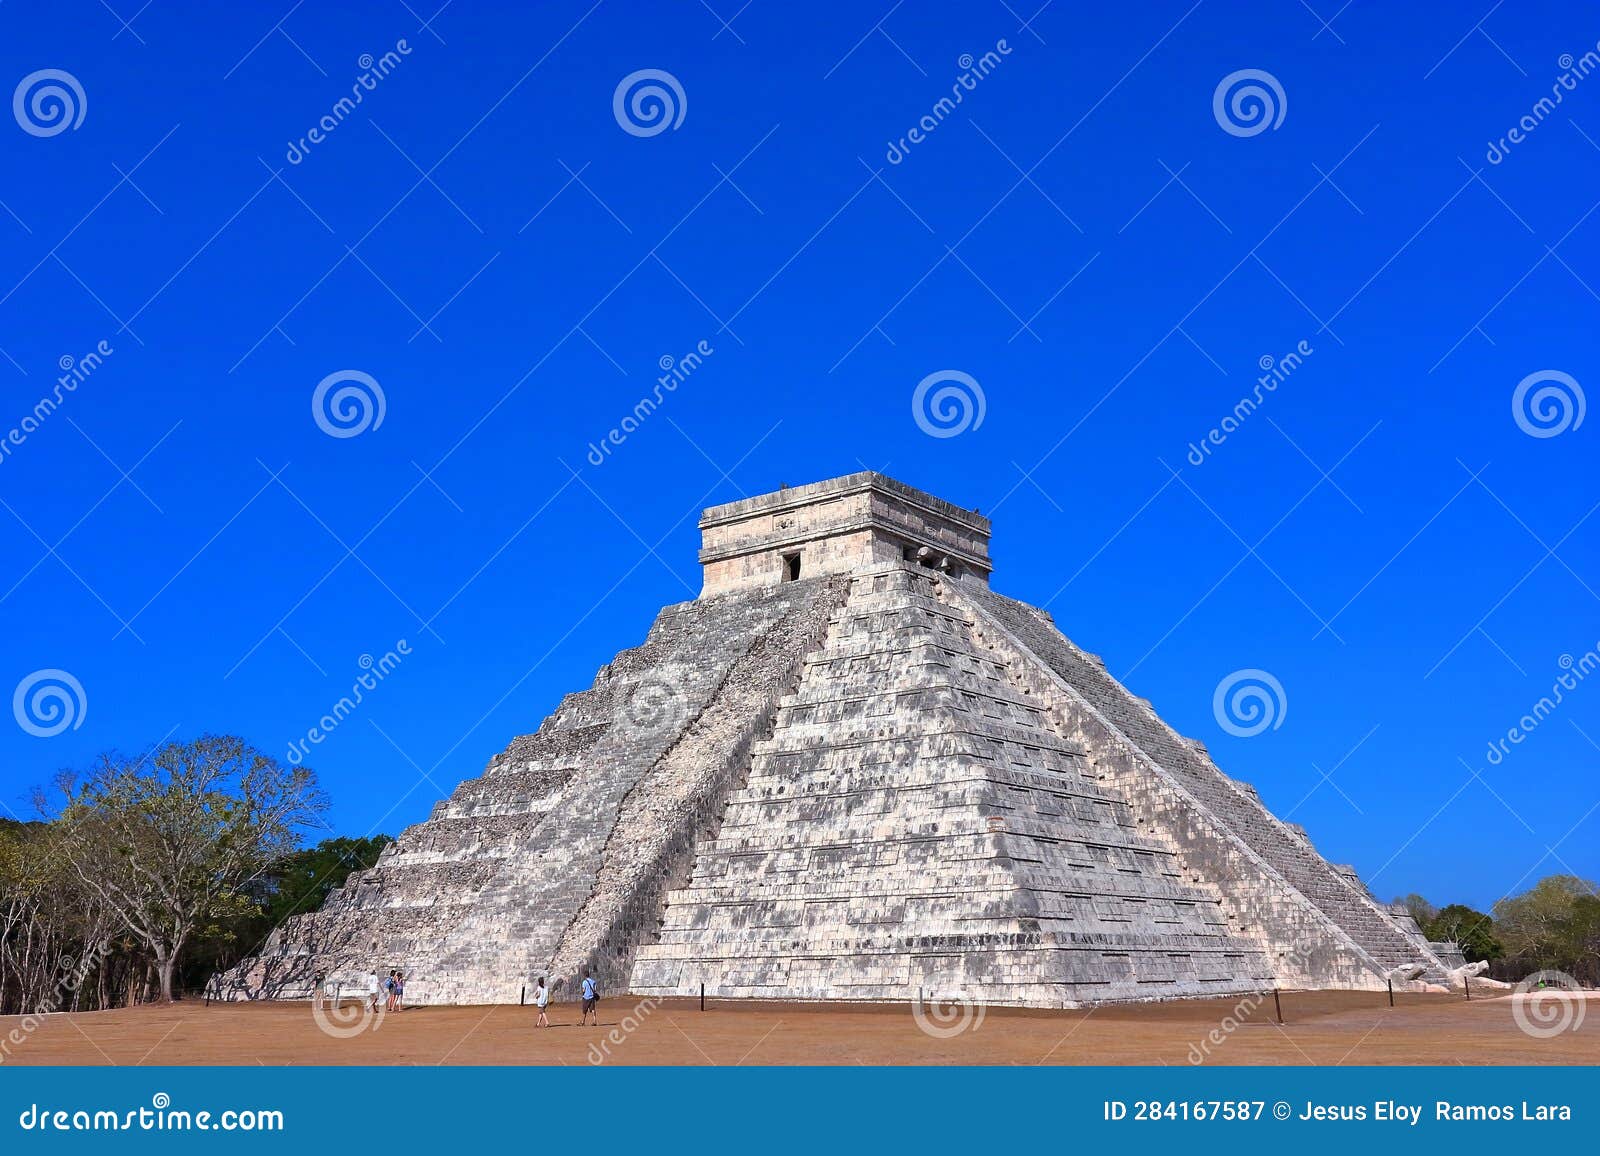 kukulcan temple in chichenitza, yucatan, mexico xiii